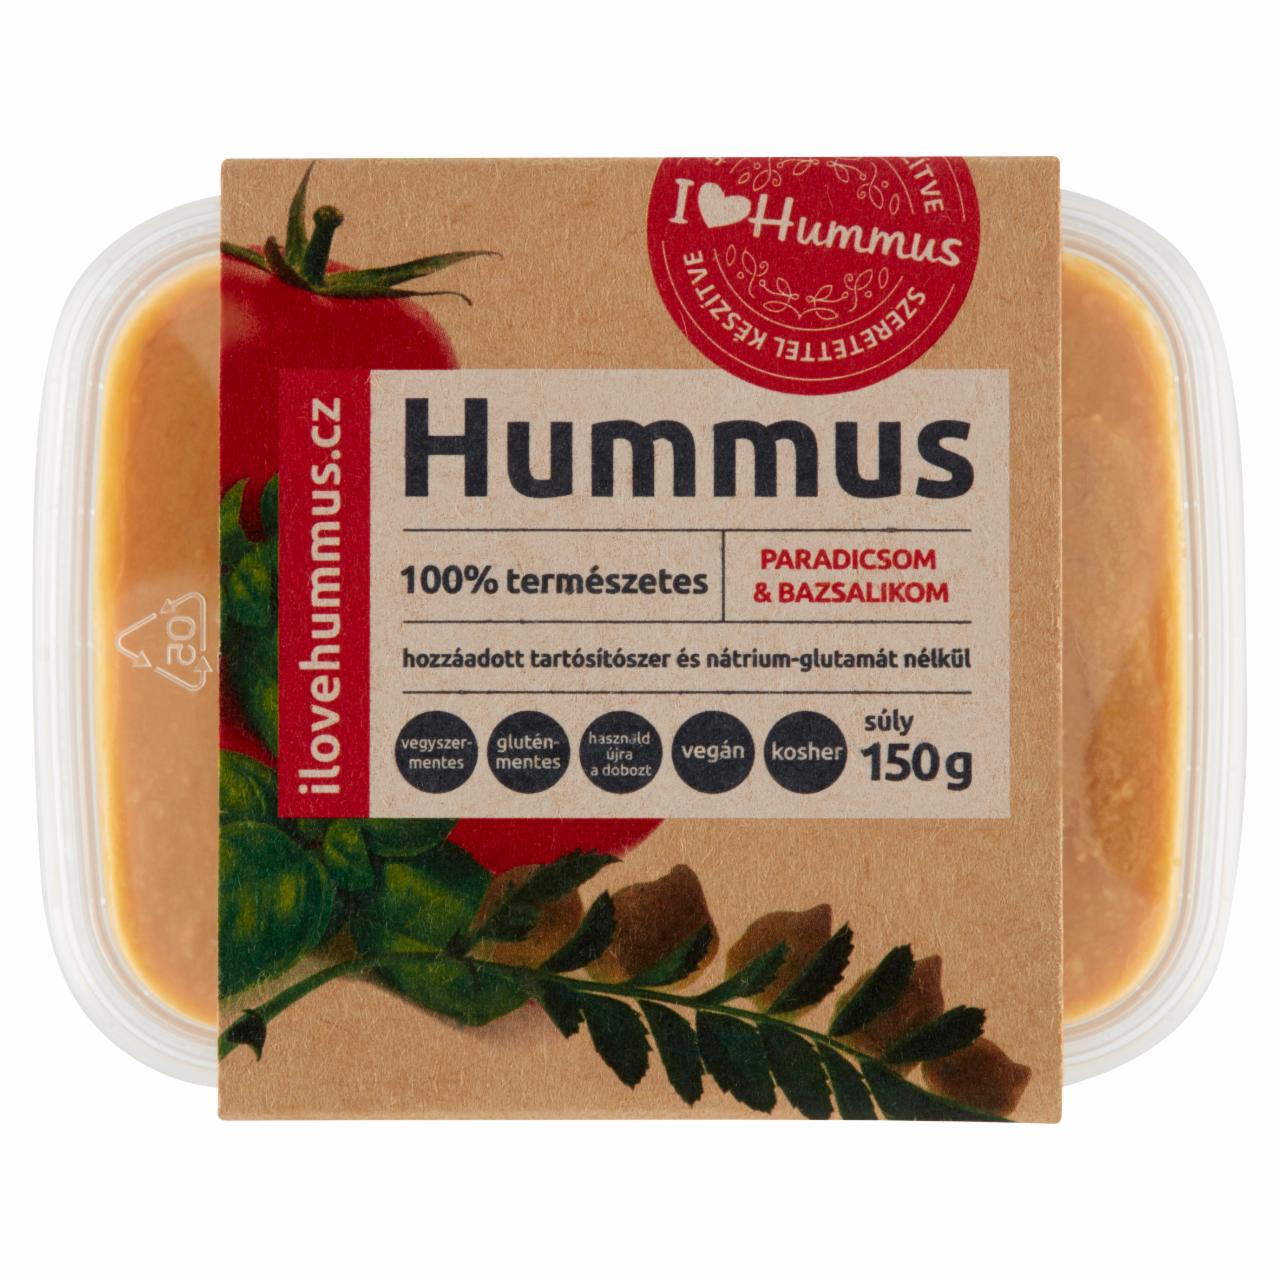 Képek - I love Hummus - hummusz paradicsom & bazsalikom 150 g